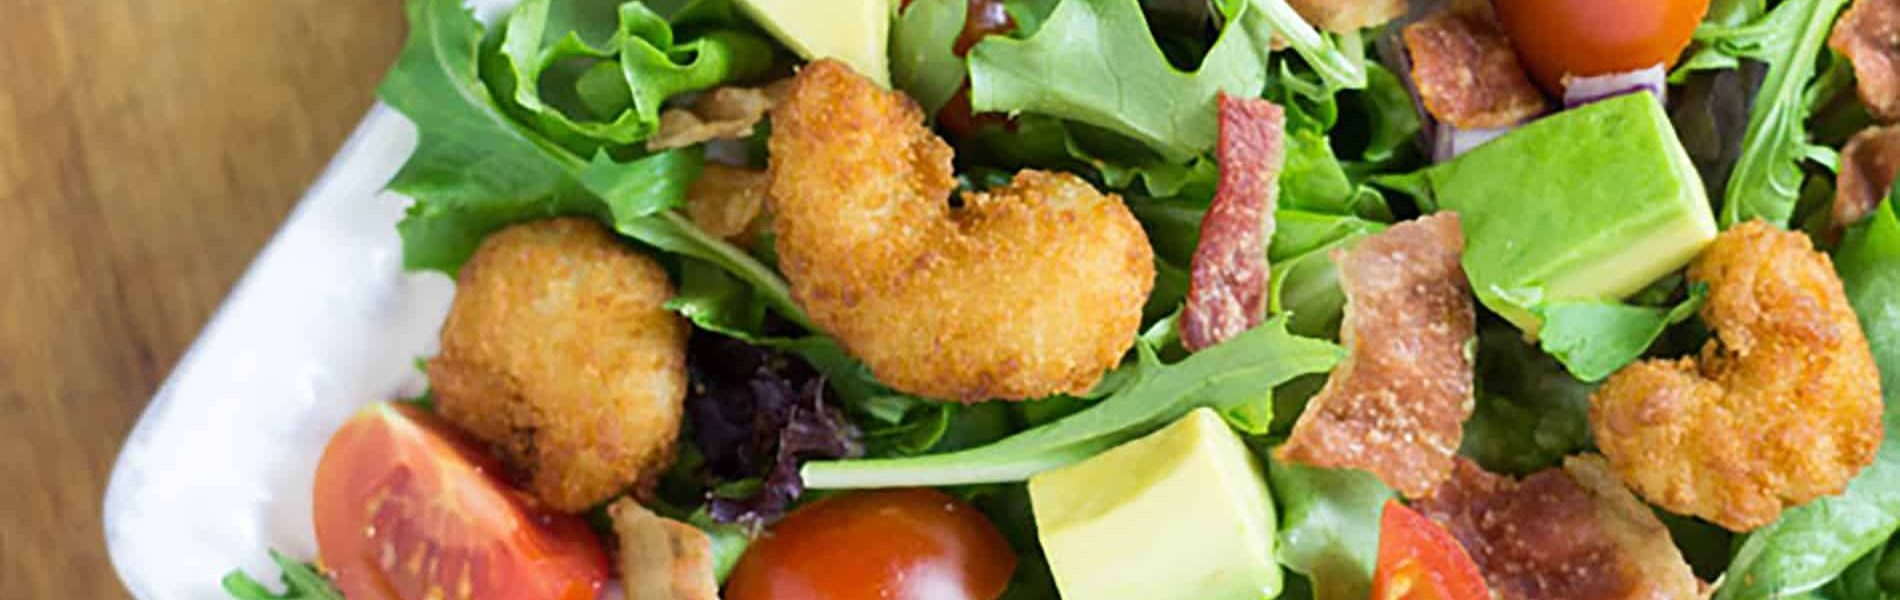 Shrimp, Avocado, Bacon Salad with Chipotle Ranch Dressing - Salad a Day ...